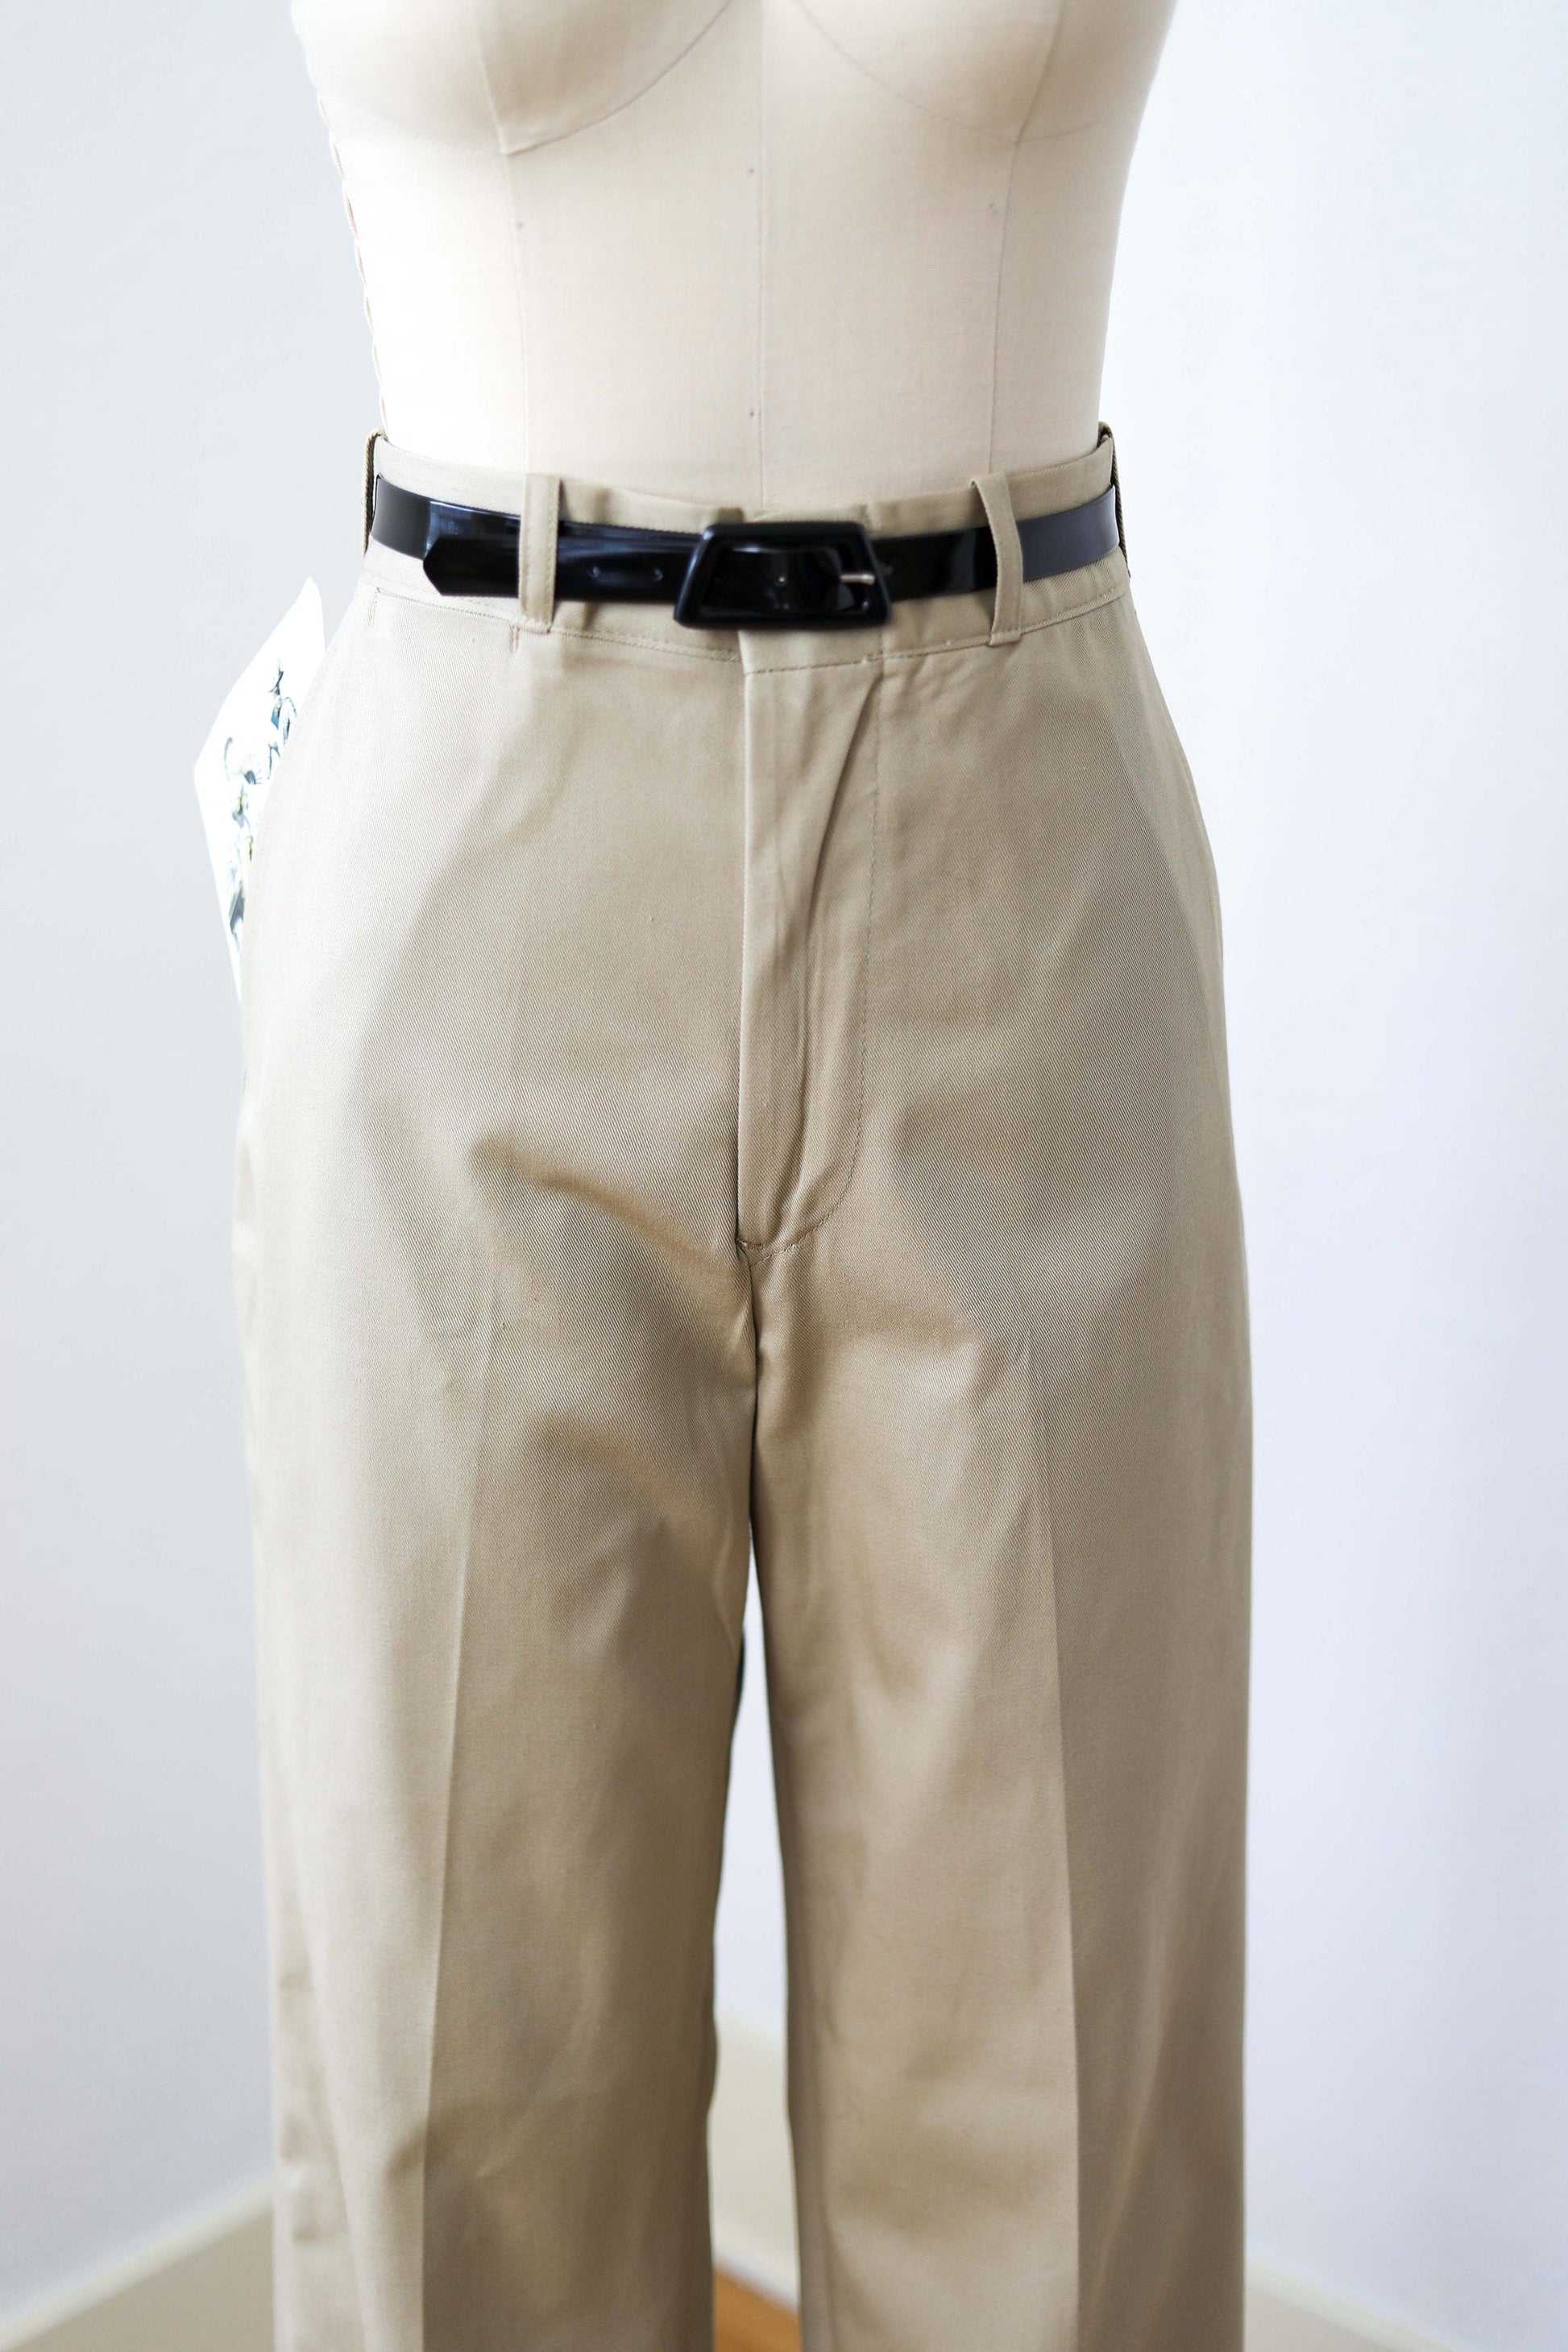 RYRJJ Men's Vintage 60s 70s Bell Bottom Pants Stretch Classic Comfort Chino  Flared Pants Retro Formal Dress Bootcut Trousers(Black,S) 